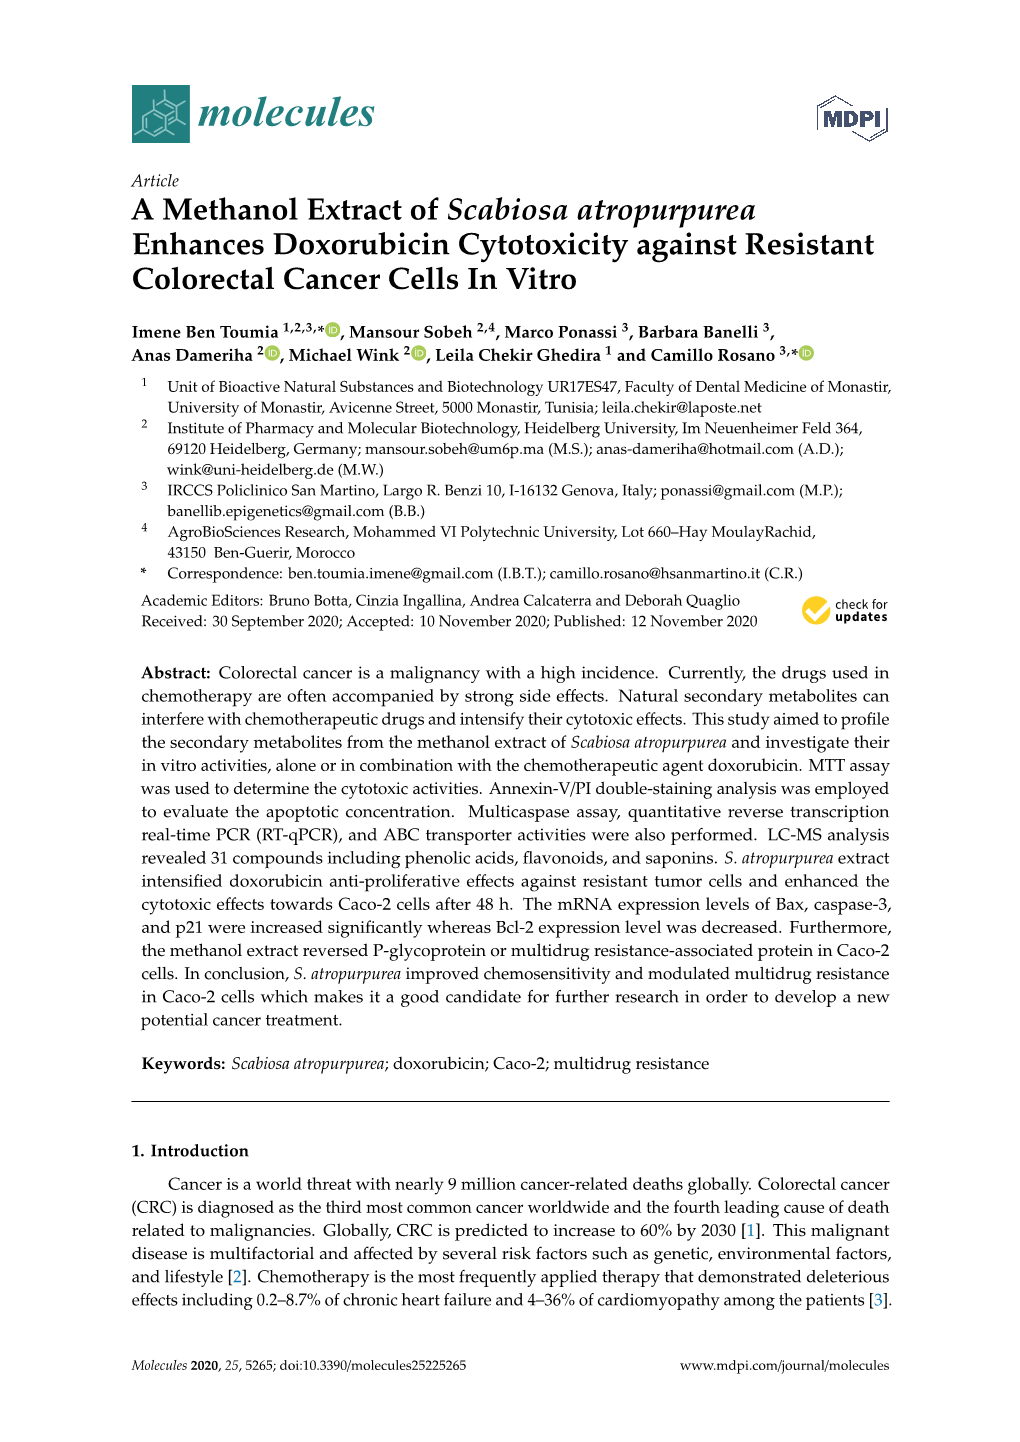 A Methanol Extract of Scabiosa Atropurpurea Enhances Doxorubicin Cytotoxicity Against Resistant Colorectal Cancer Cells in Vitro